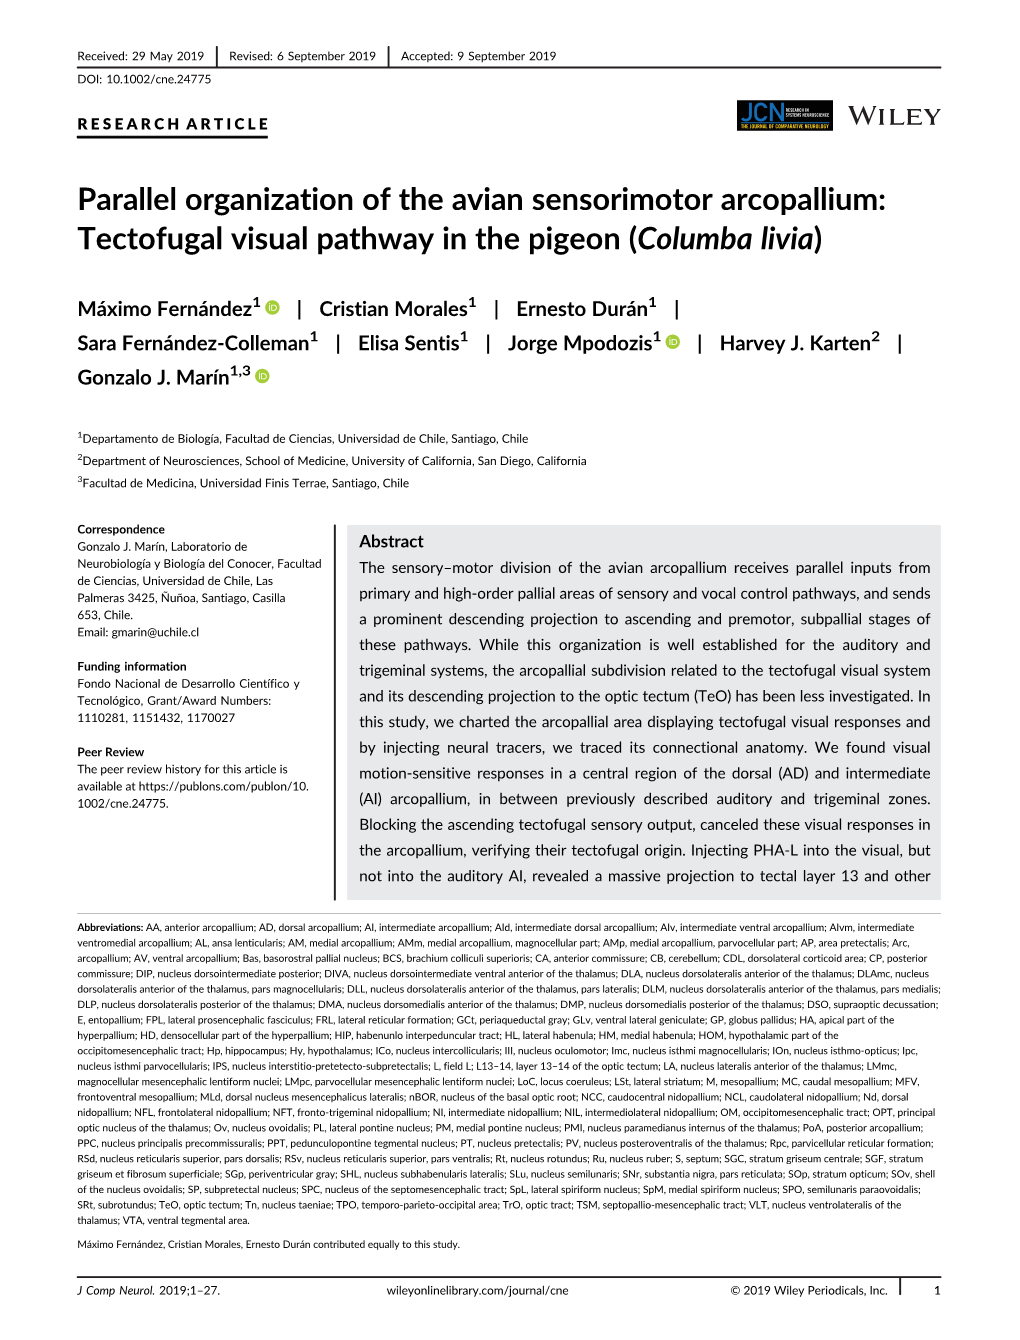 Parallel Organization of the Avian Sensorimotor Arcopallium: Tectofugal Visual Pathway in the Pigeon (Columba Livia)